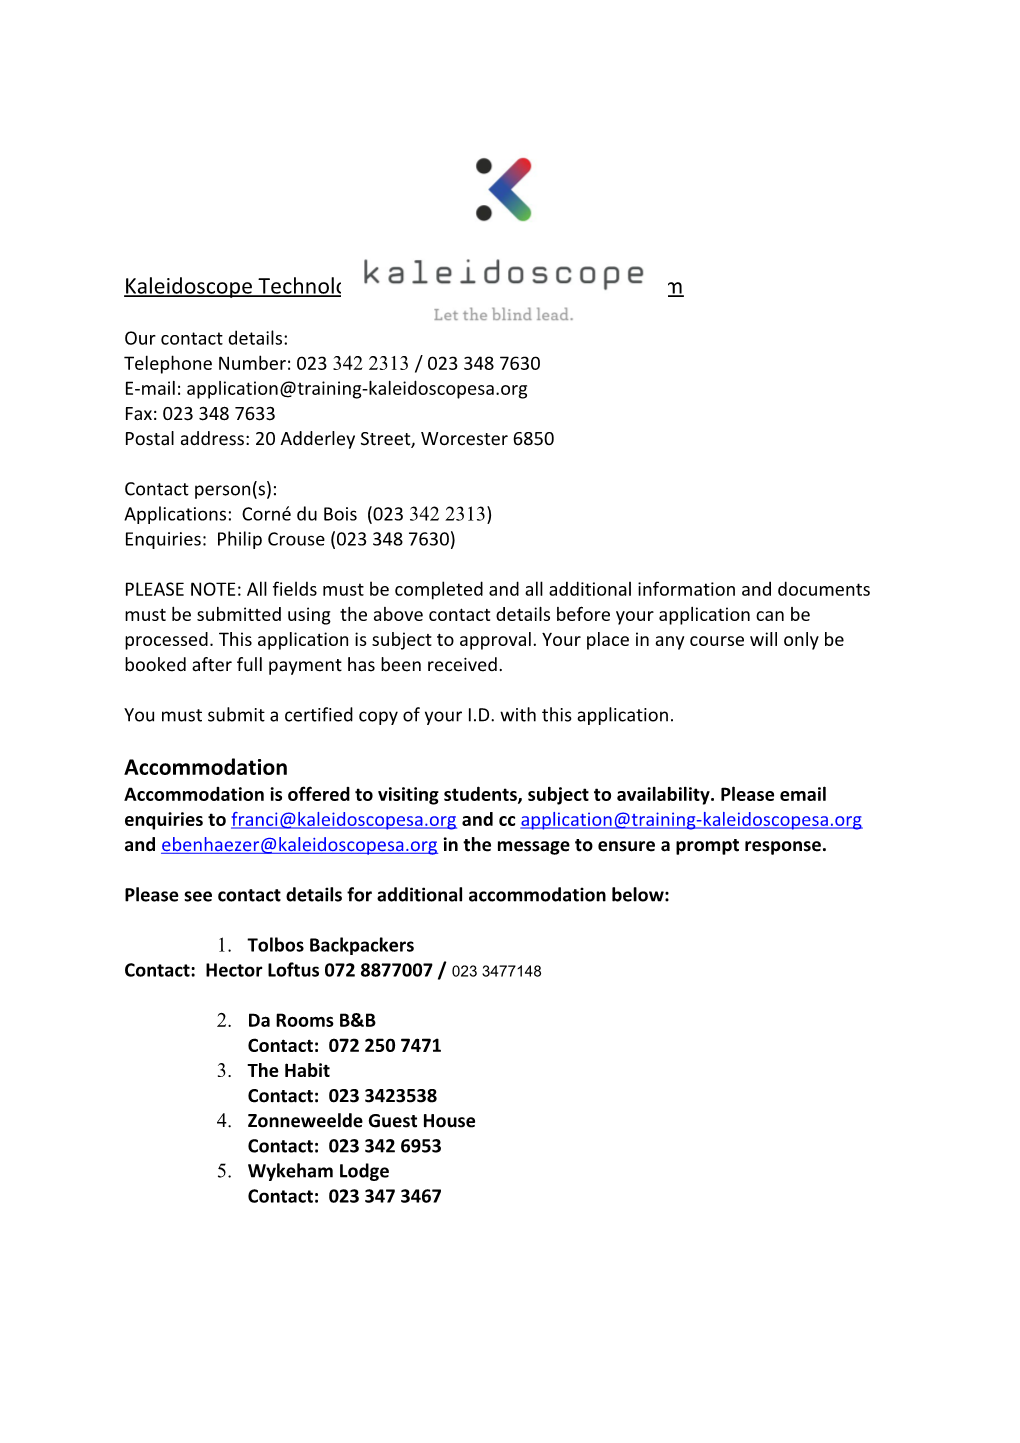 Kaleidoscope Technology Centre Online Application Form